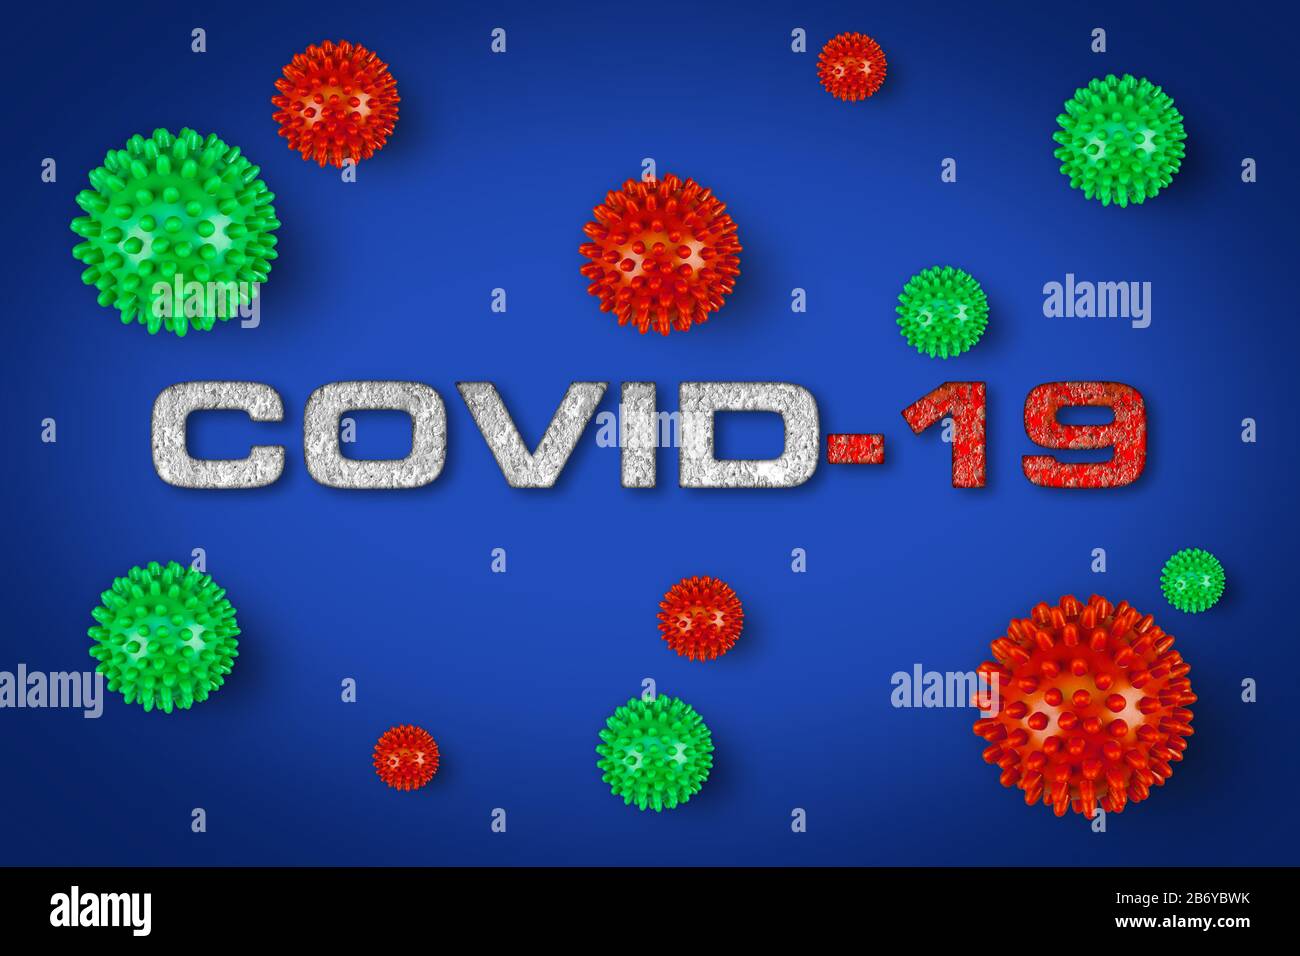 Covid-19 rot-weißer Schriftzug mit grünem Corona-Virus auf hellem hellgrauem Hintergrund. Cornavirus Global Outbreak Pandemic Epidemic Medical Concept On Stockfoto